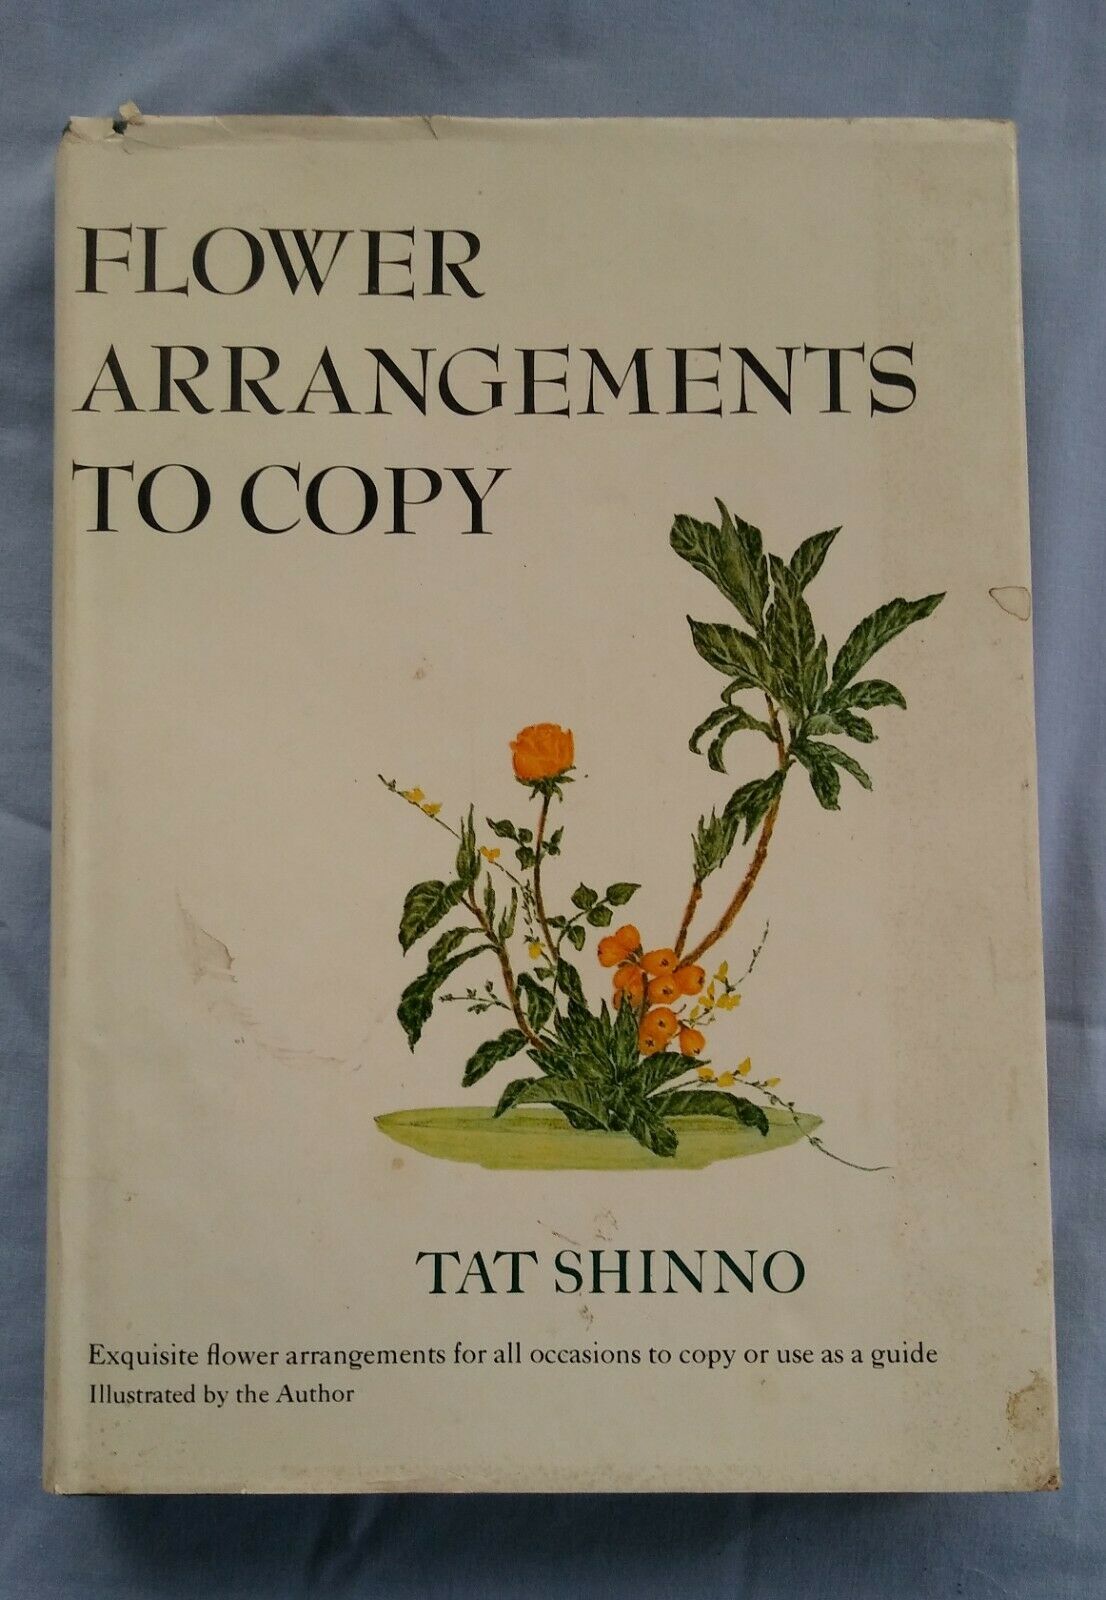 Flower Arrangements To Copy By Tat Shinno